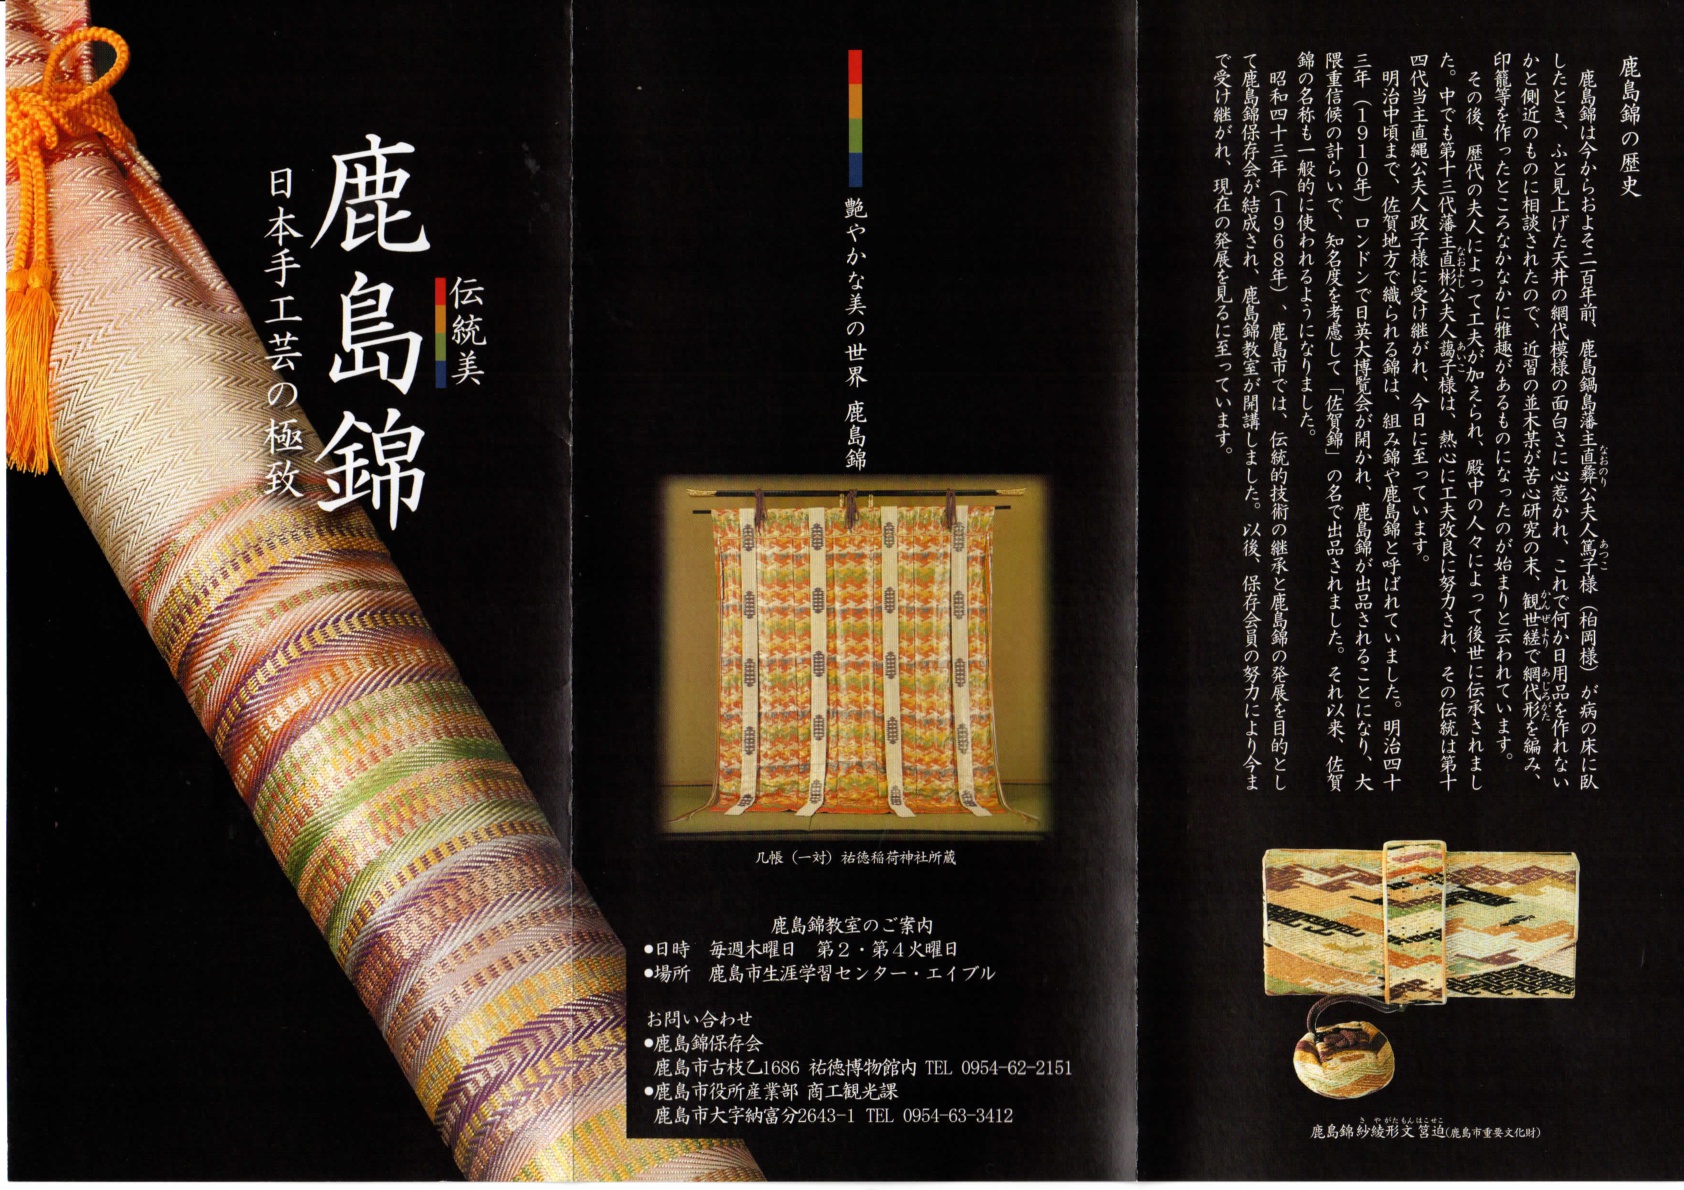 Kashima Nishiki Textiles